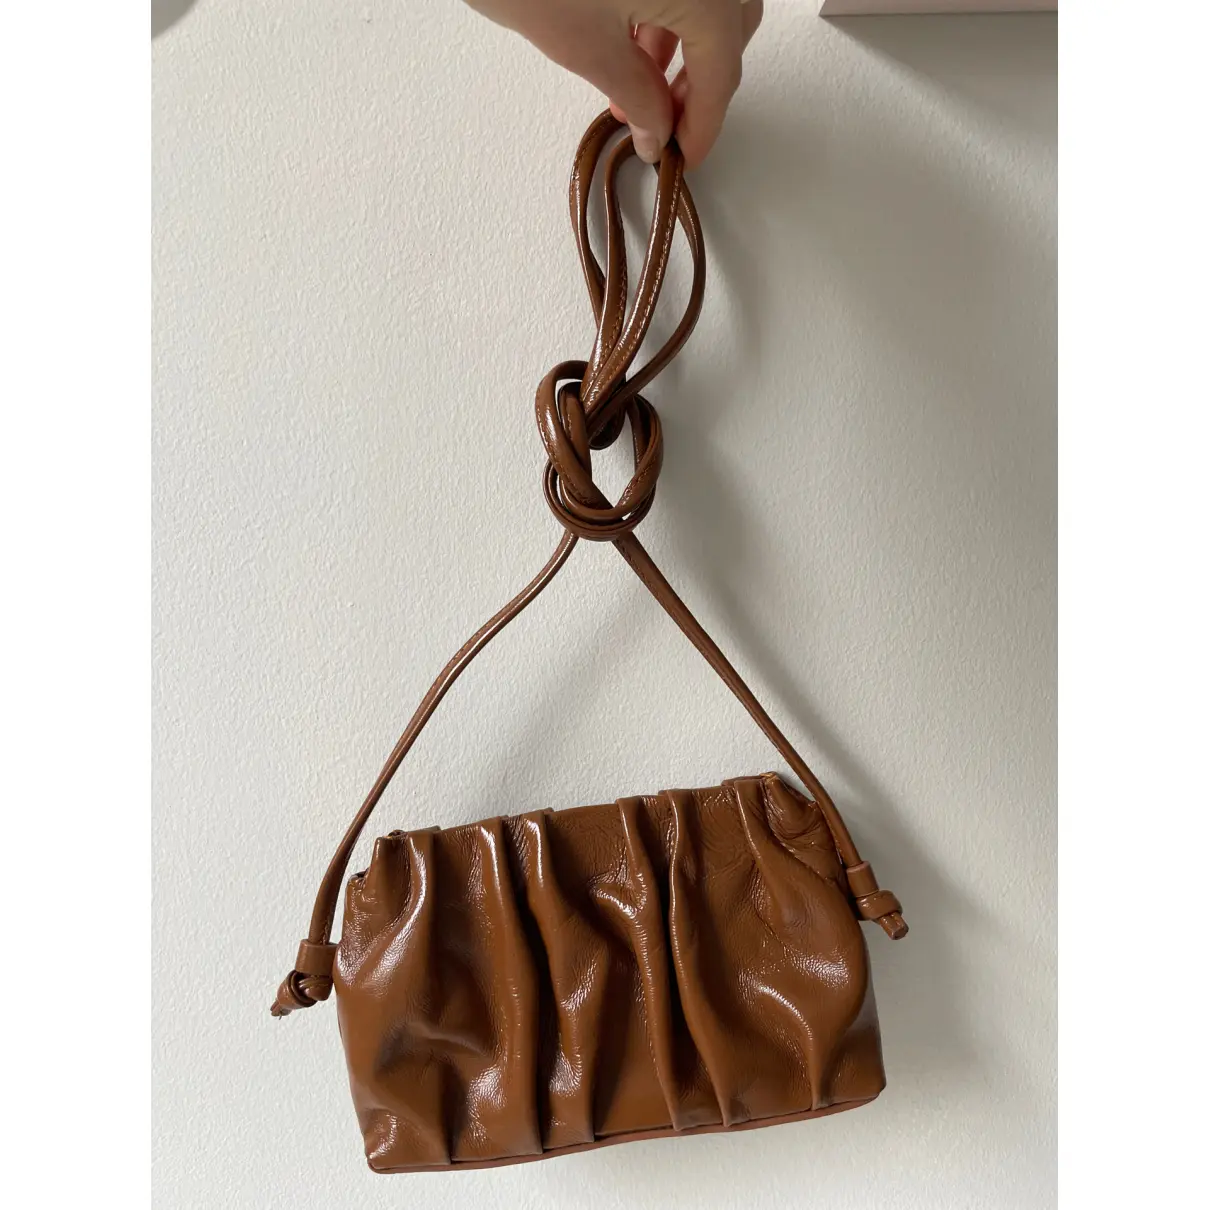 Buy Elleme Leather crossbody bag online